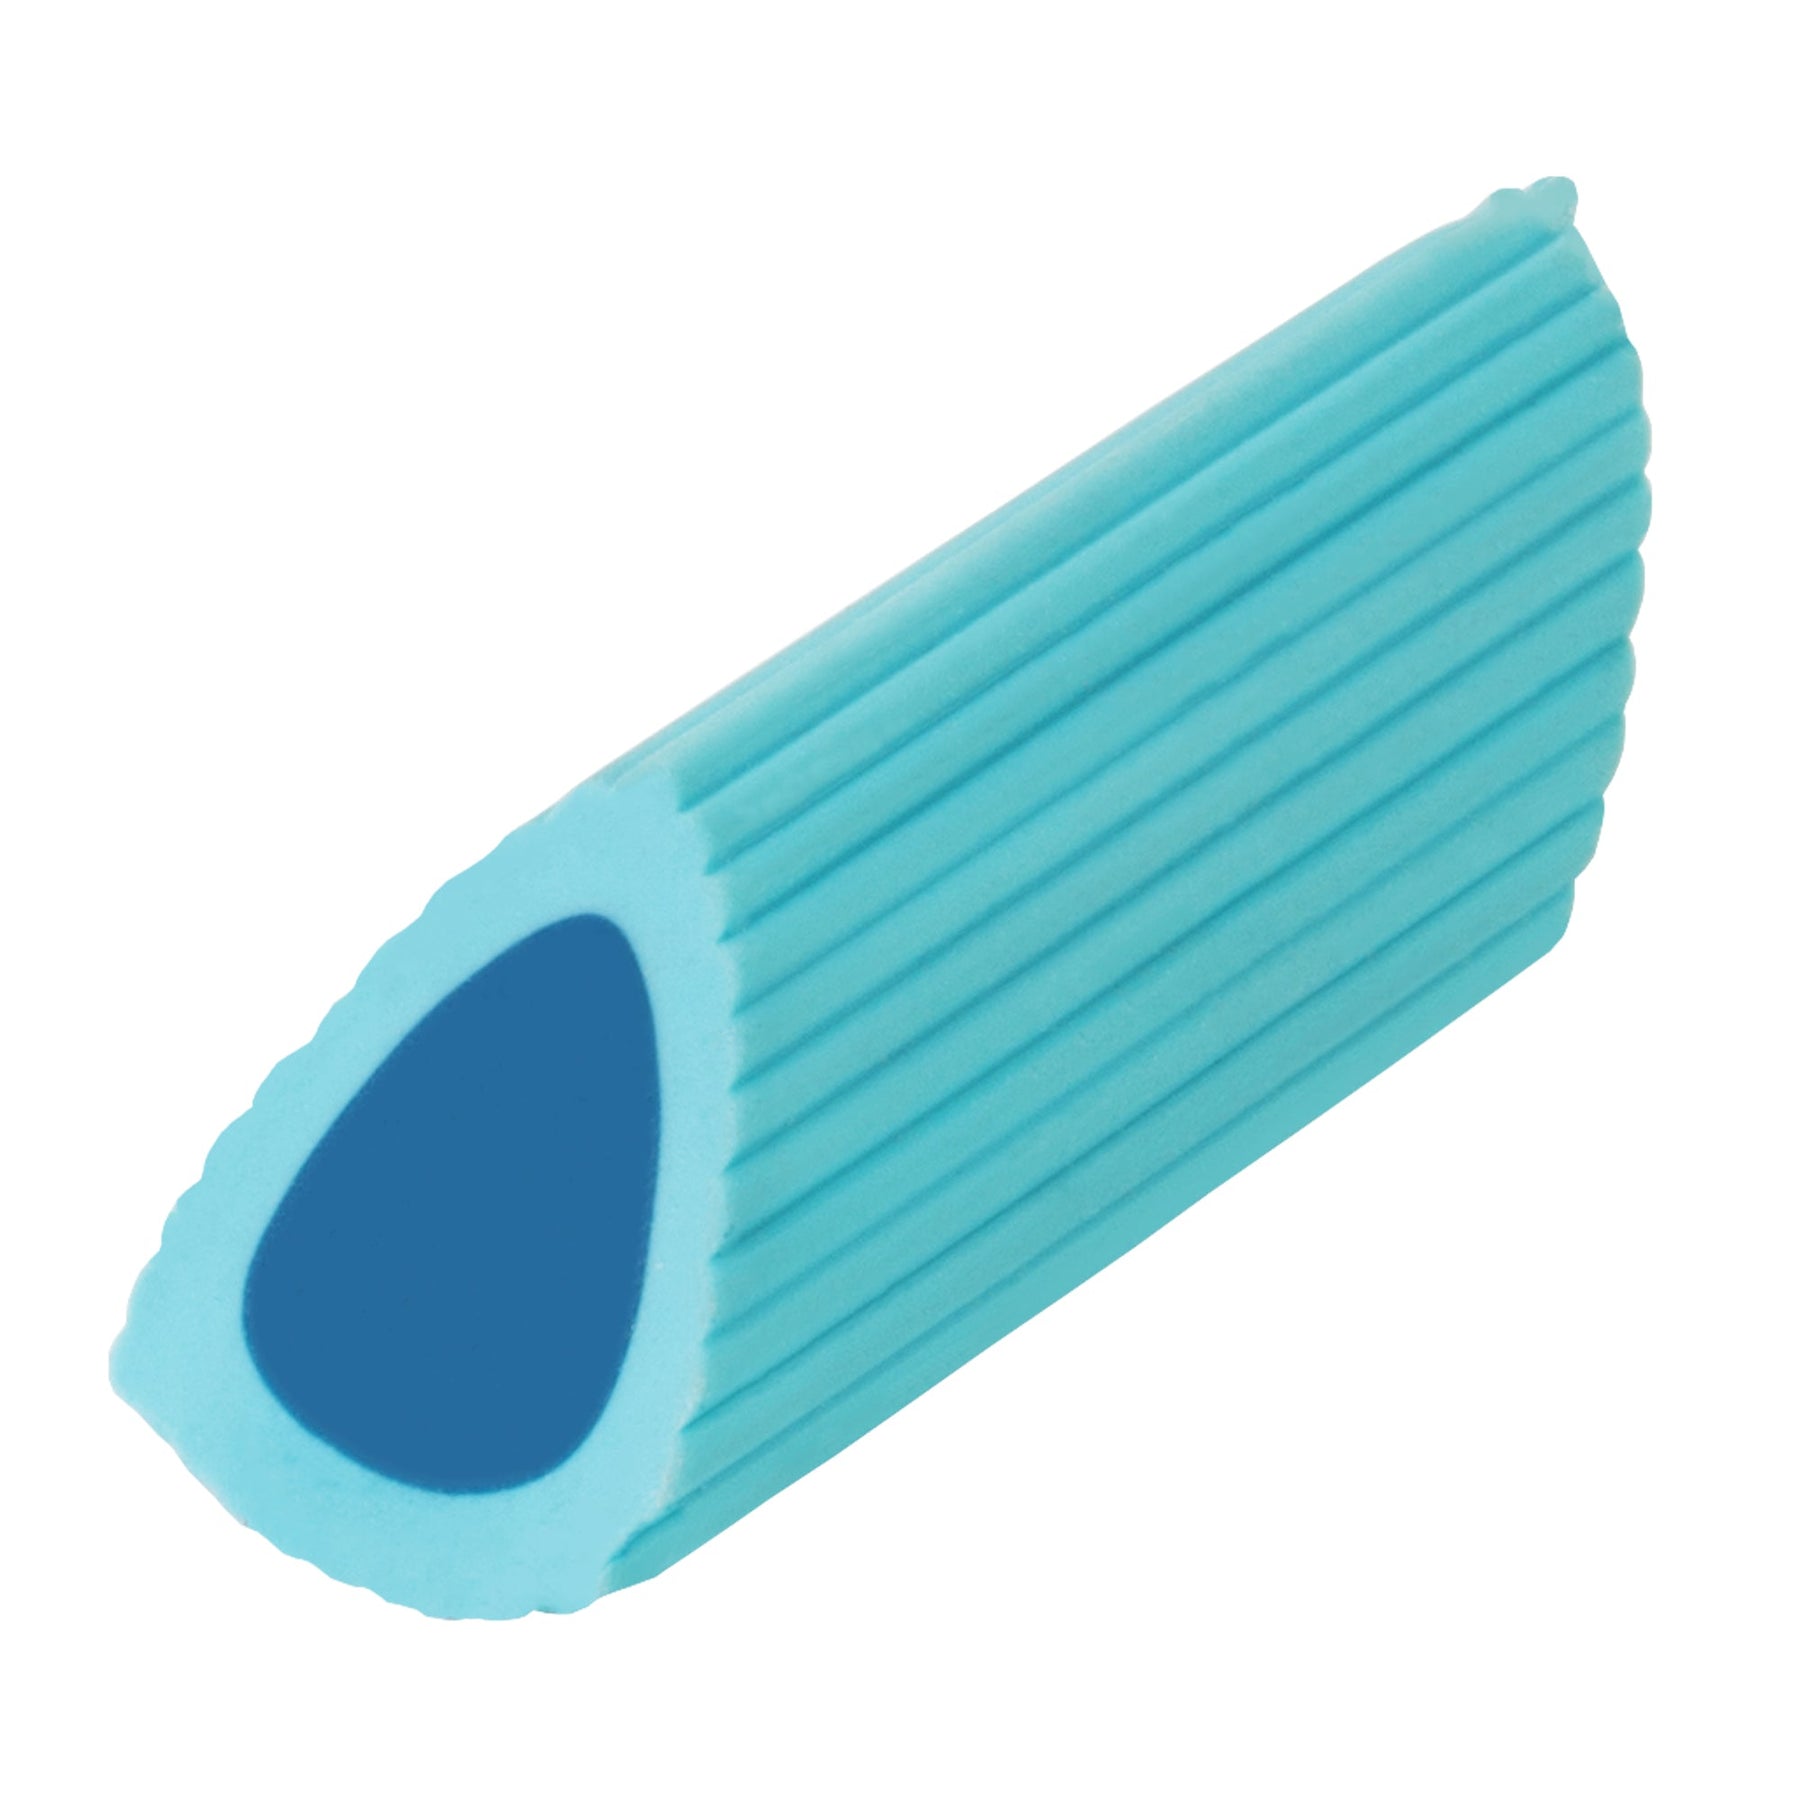 Pacific Arc, Eraser: Prism - Soft plastic - prism shape - blue